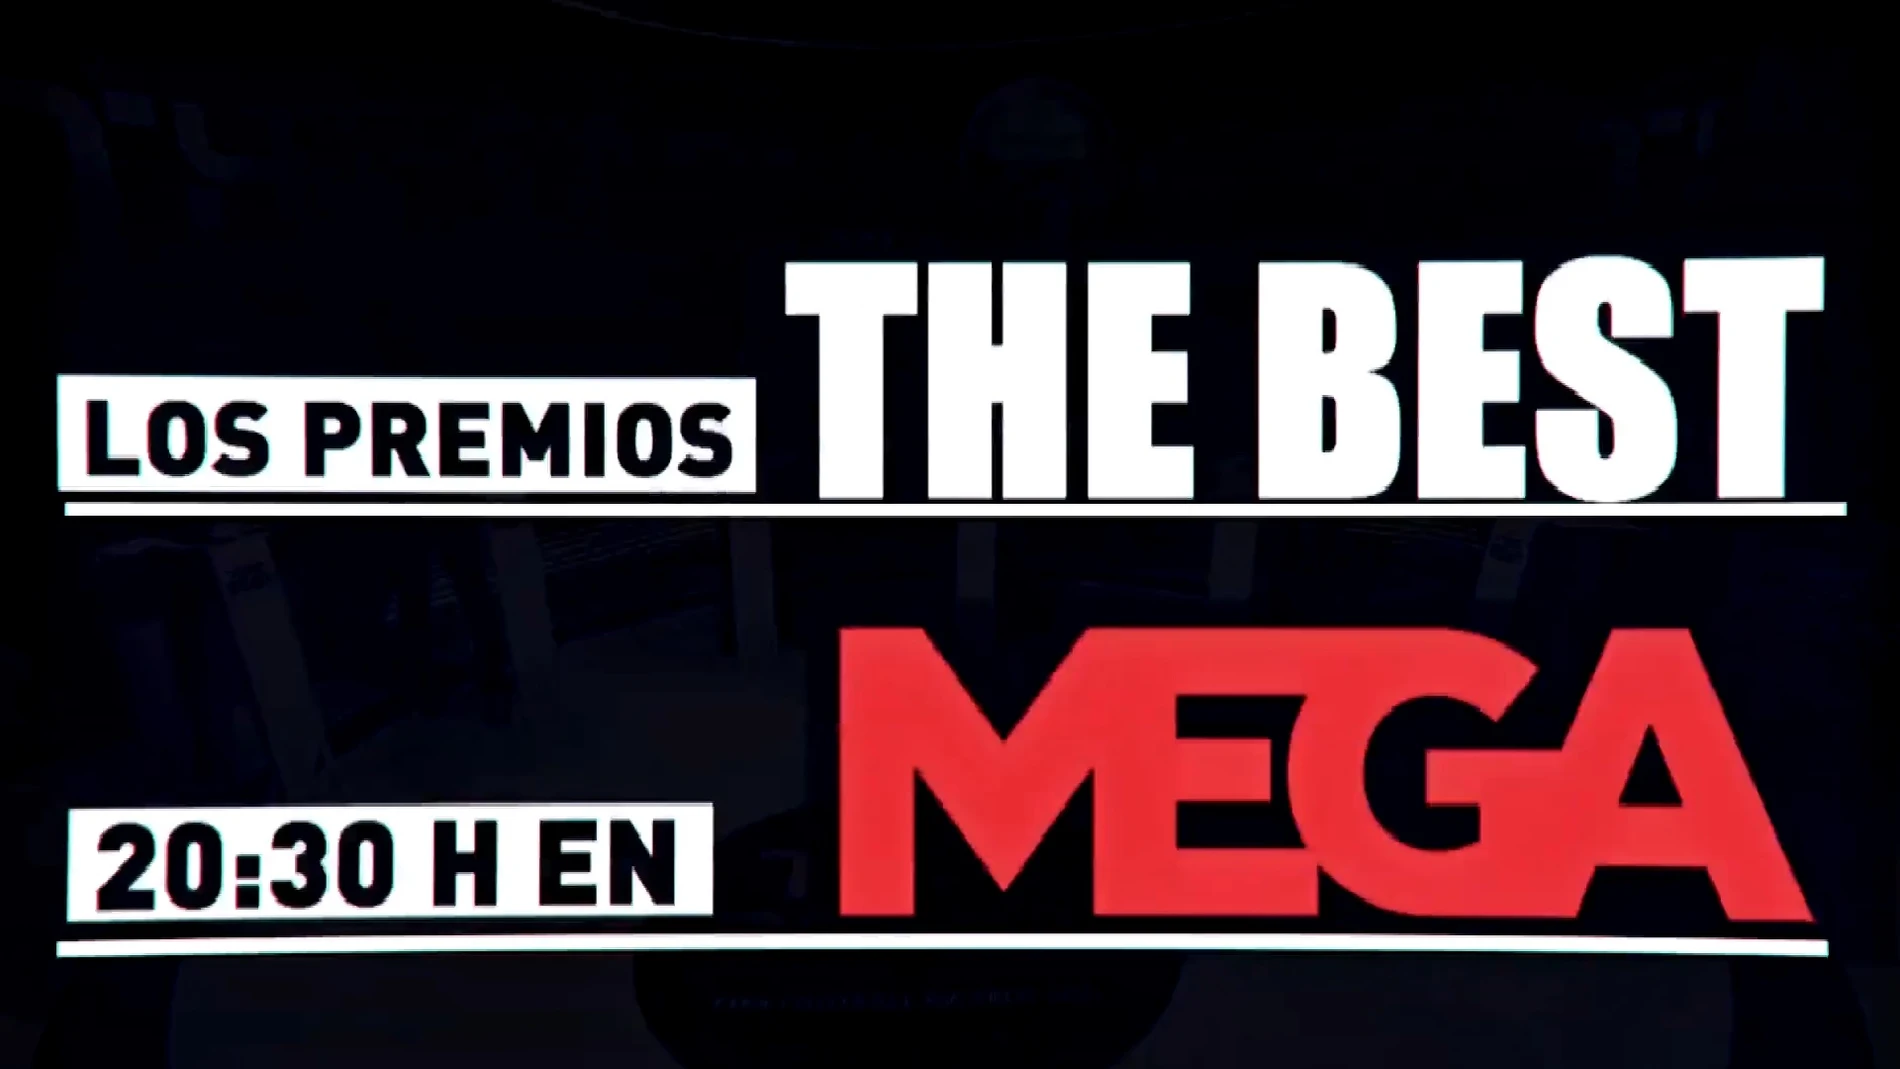 Premios The Best en Mega